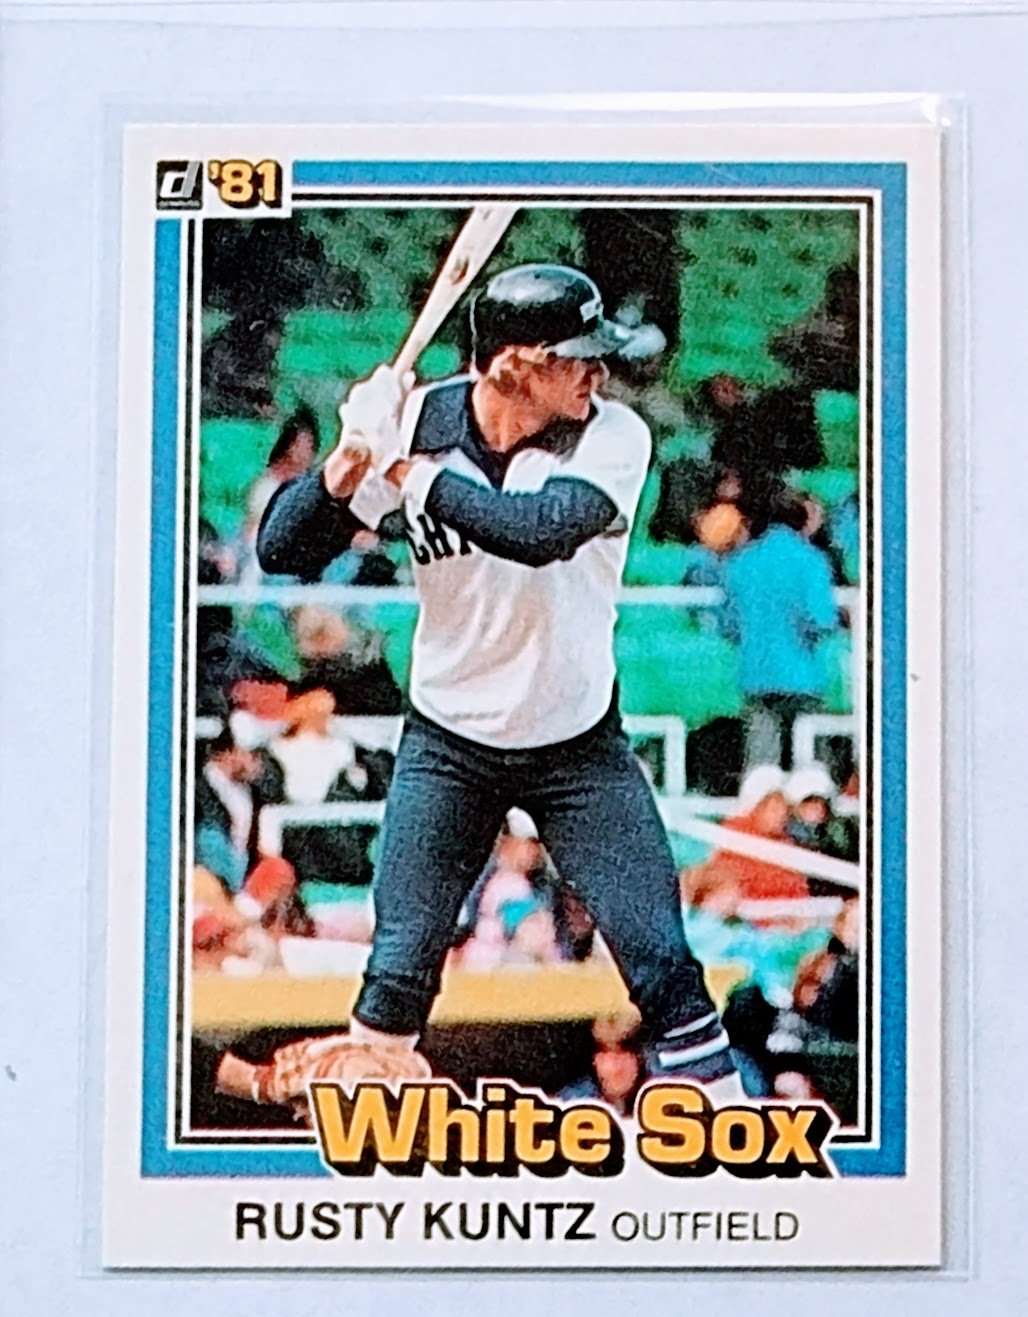 1981 Donruss Rusty Kuntz Baseball Trading Card TPTV simple Xclusive Collectibles   